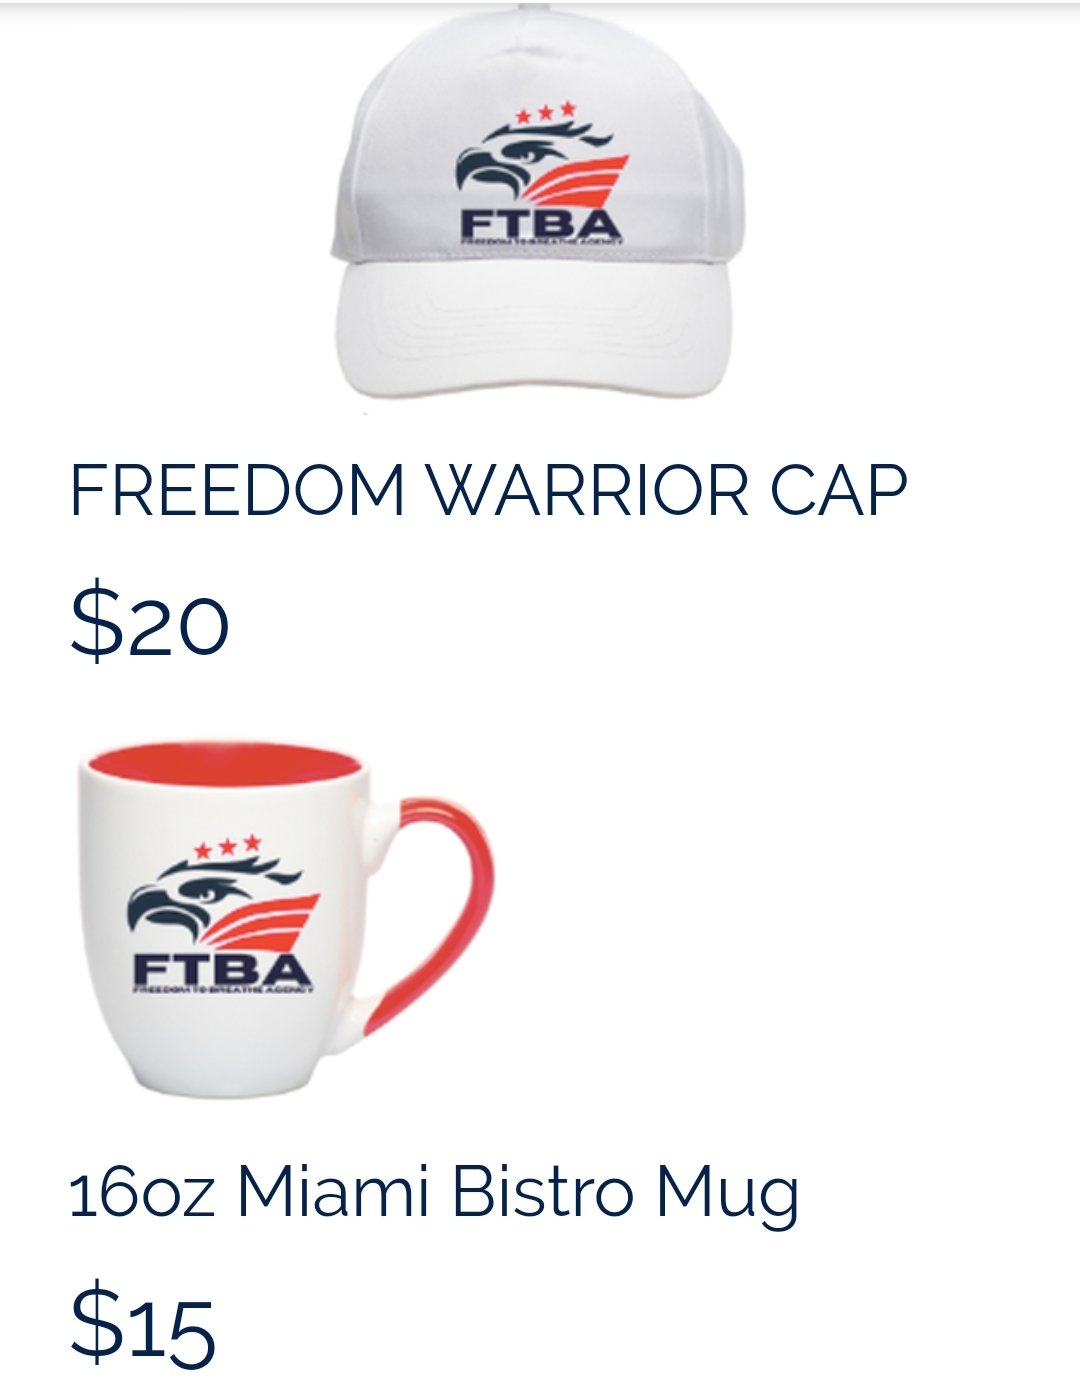 Ftba Freedom Warrior Cap $20 Ftba 16oz Miami Bistro Mug $15